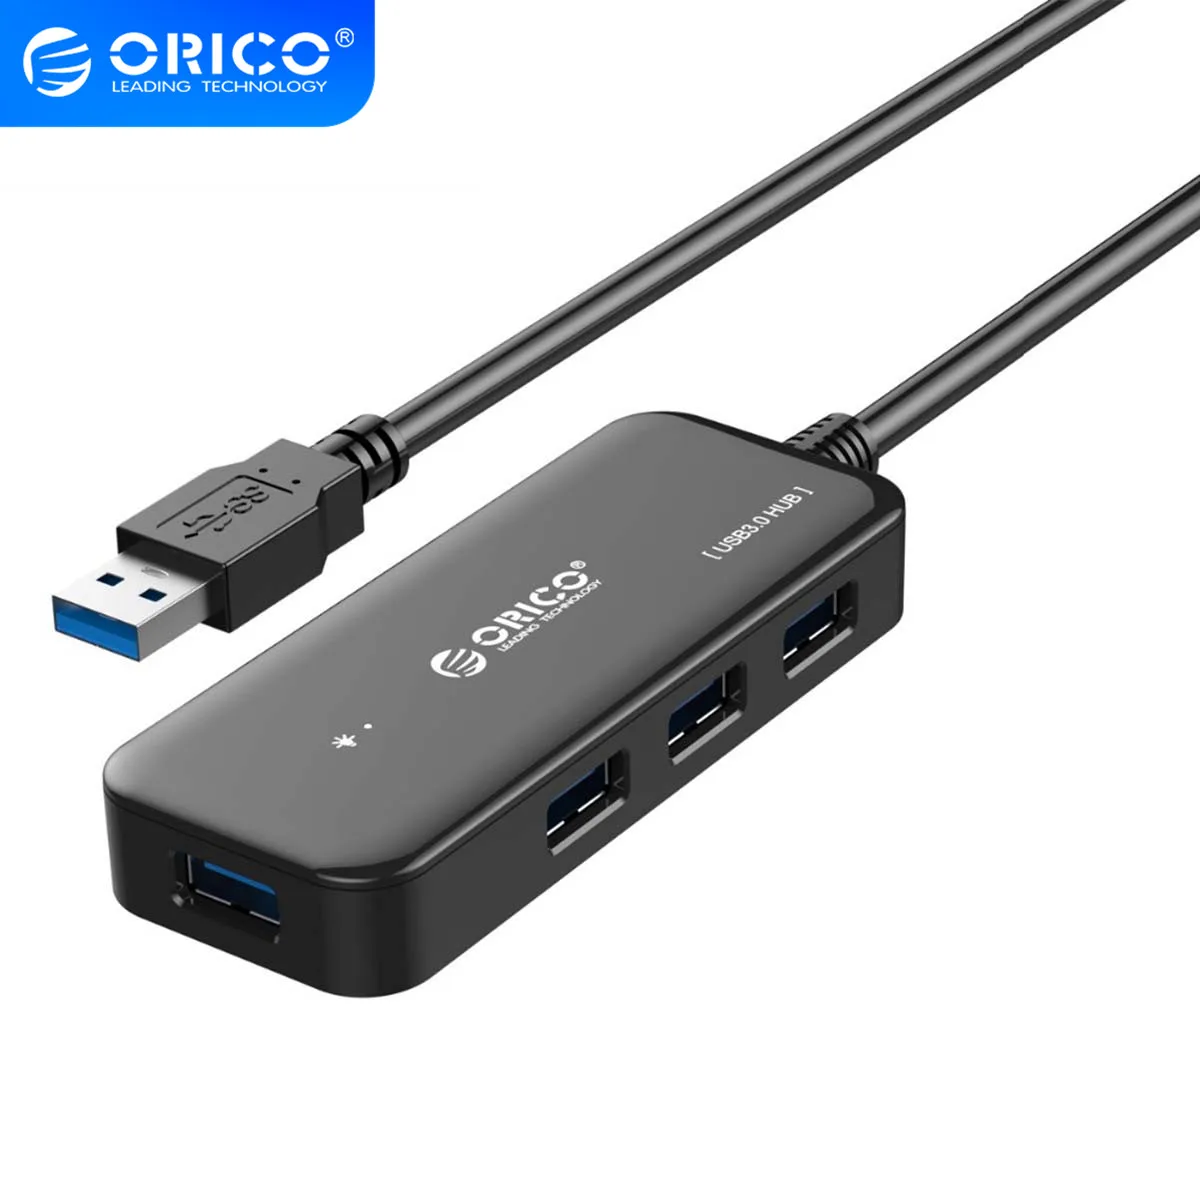 ORICO USB 3.0 HUB 4 Port Mini HUB Podpora OTG Funkce pro MacBook Notebook Počítač Tablet OTG USB HUB 15cm Délka Kabelu 2